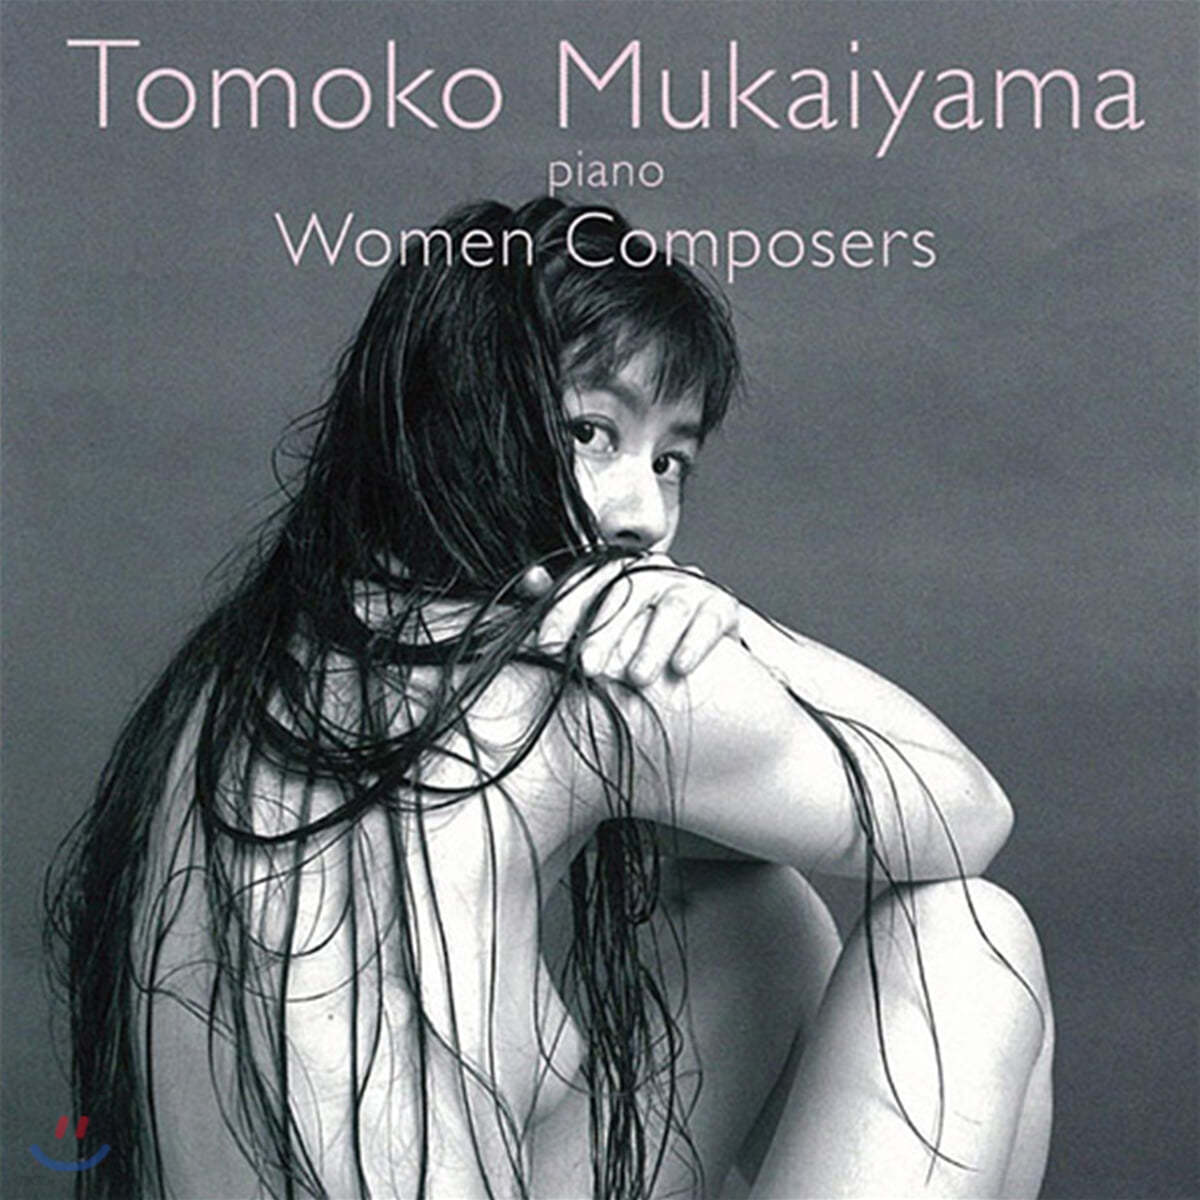 Tomoko Mukaiyama 토모코 무카이야마가 연주하는 여성 작곡가 작품집 (Women Composers) [LP]